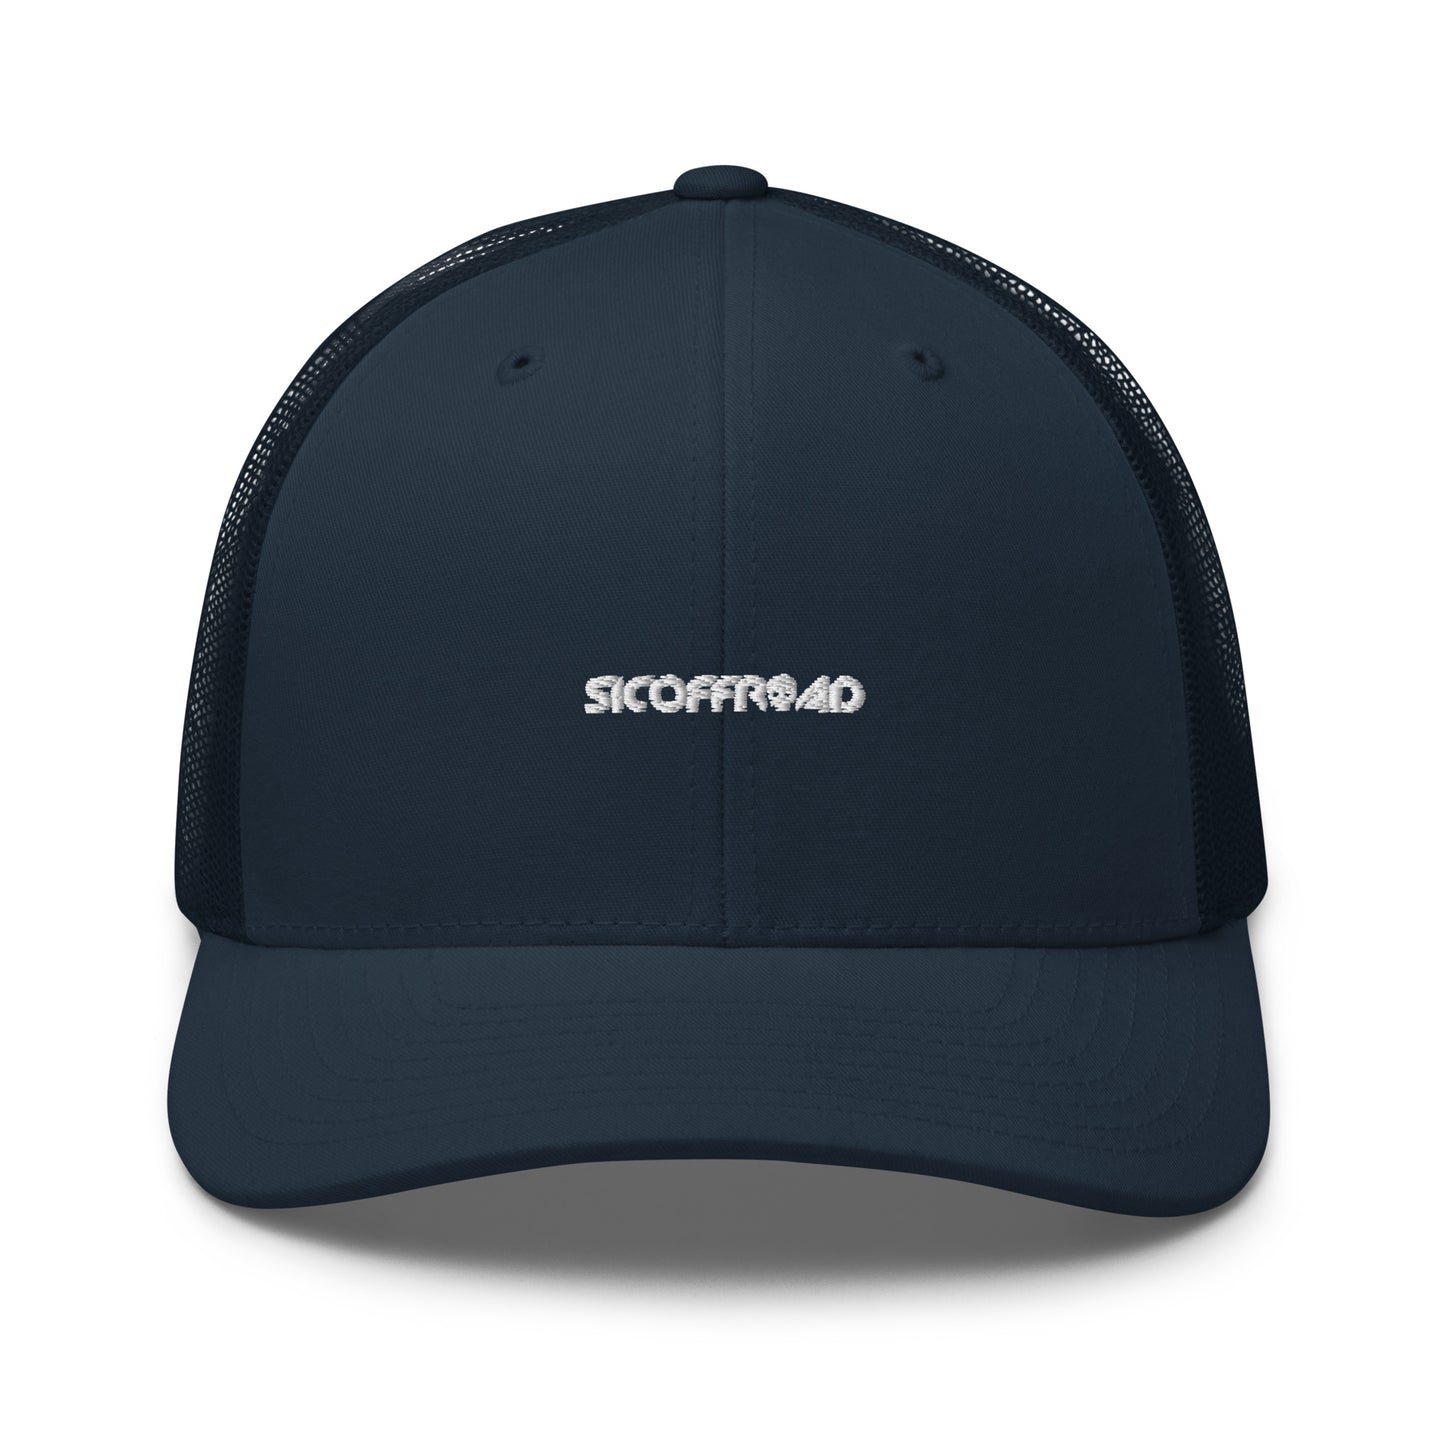 Sicoffroad Trucker Cap